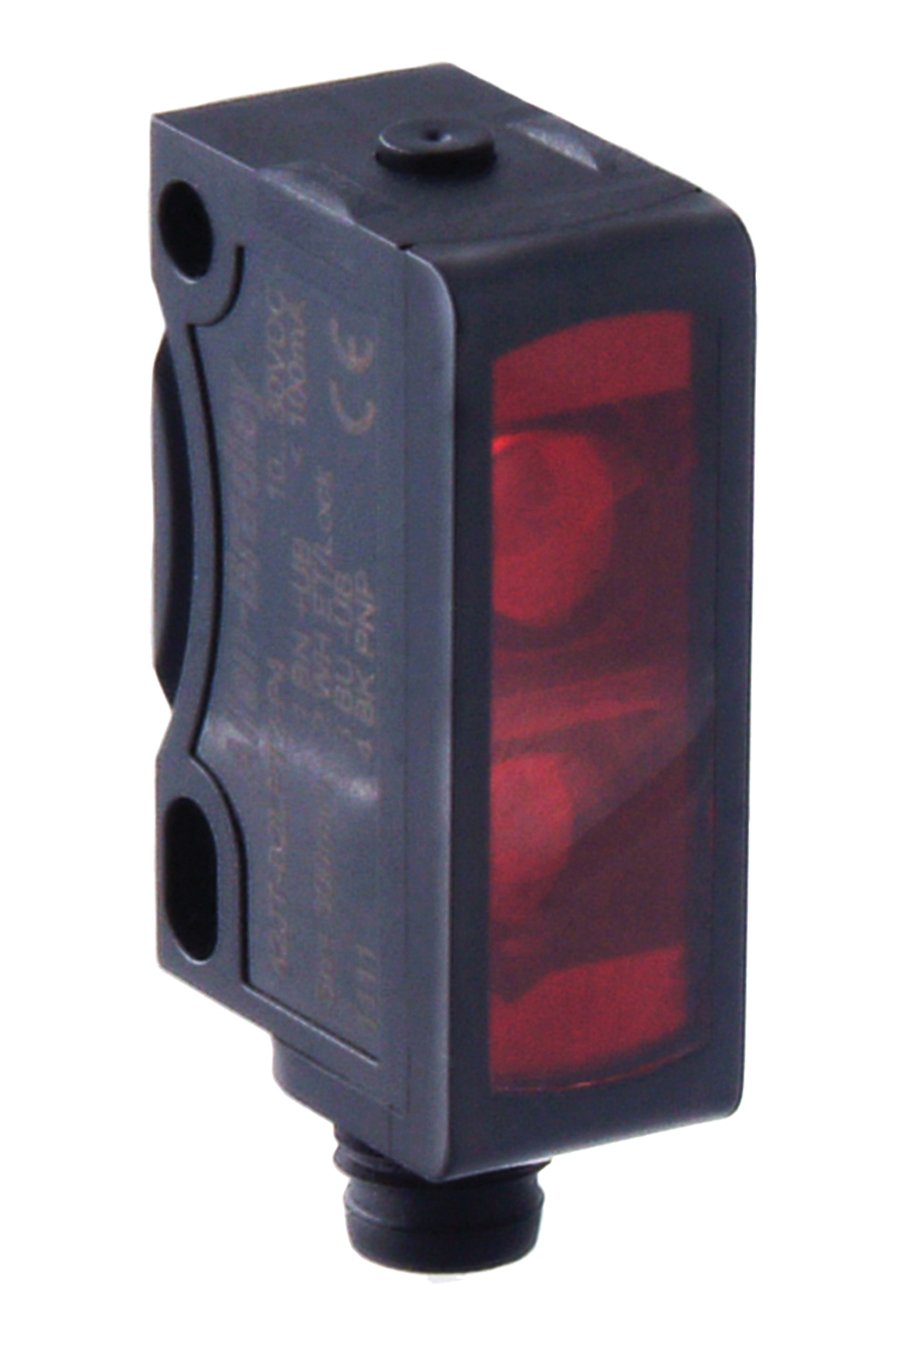 Black Allen-Bradley rectangular sensor with red lens facing right.